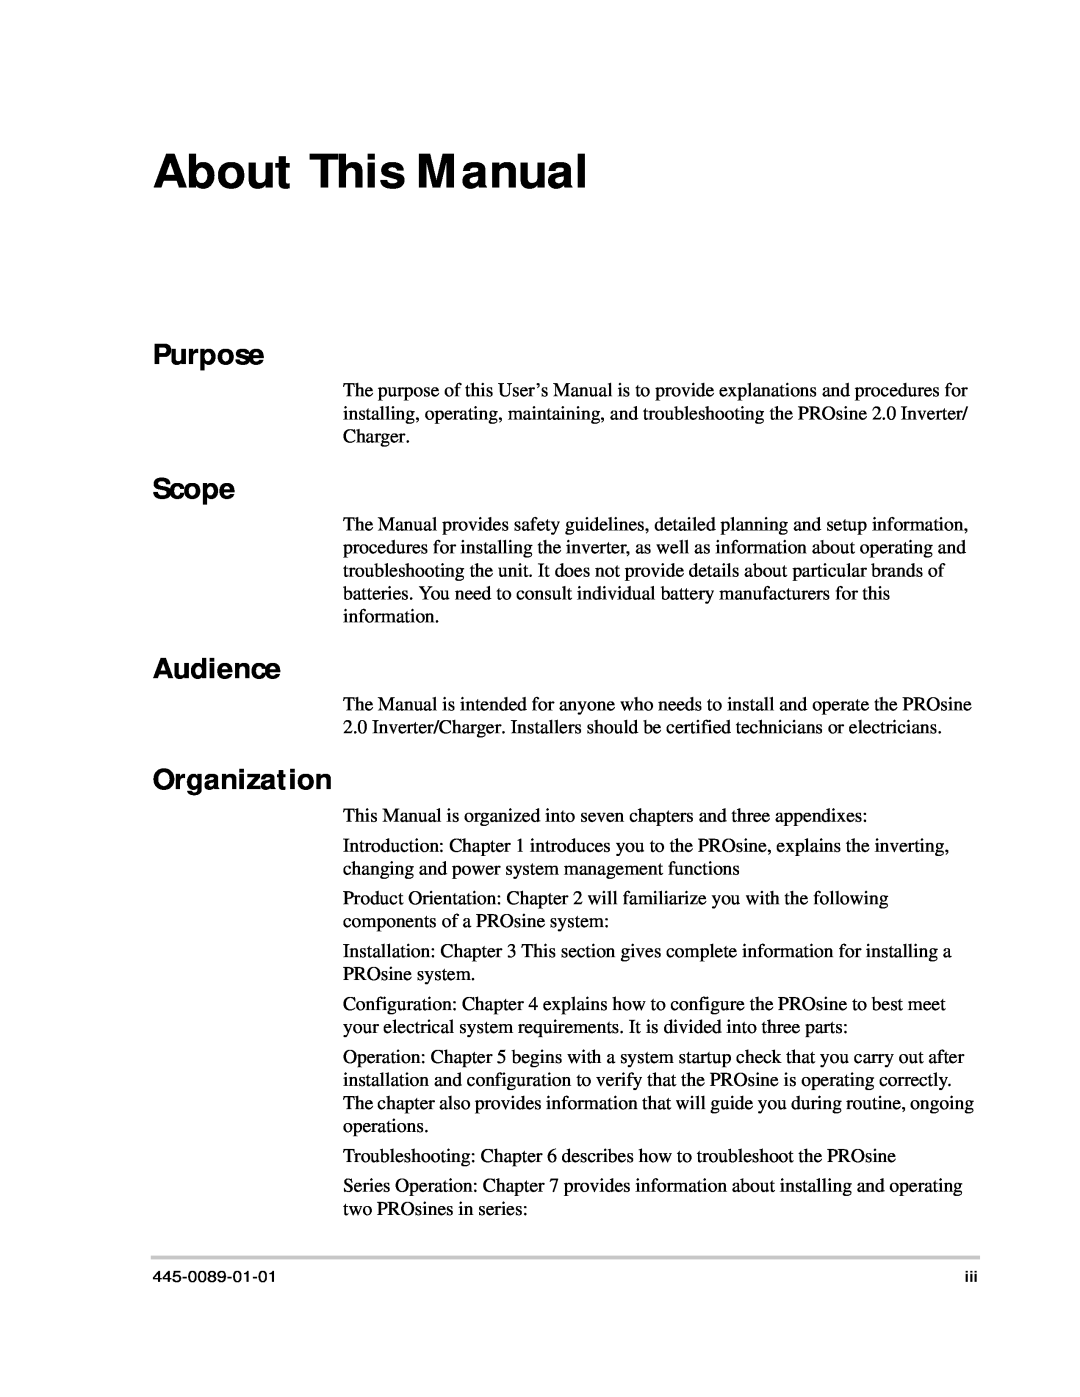 Xantrex Technology PROsine 2.0 user manual About This Manual, Purpose, Scope, Audience, Organization 